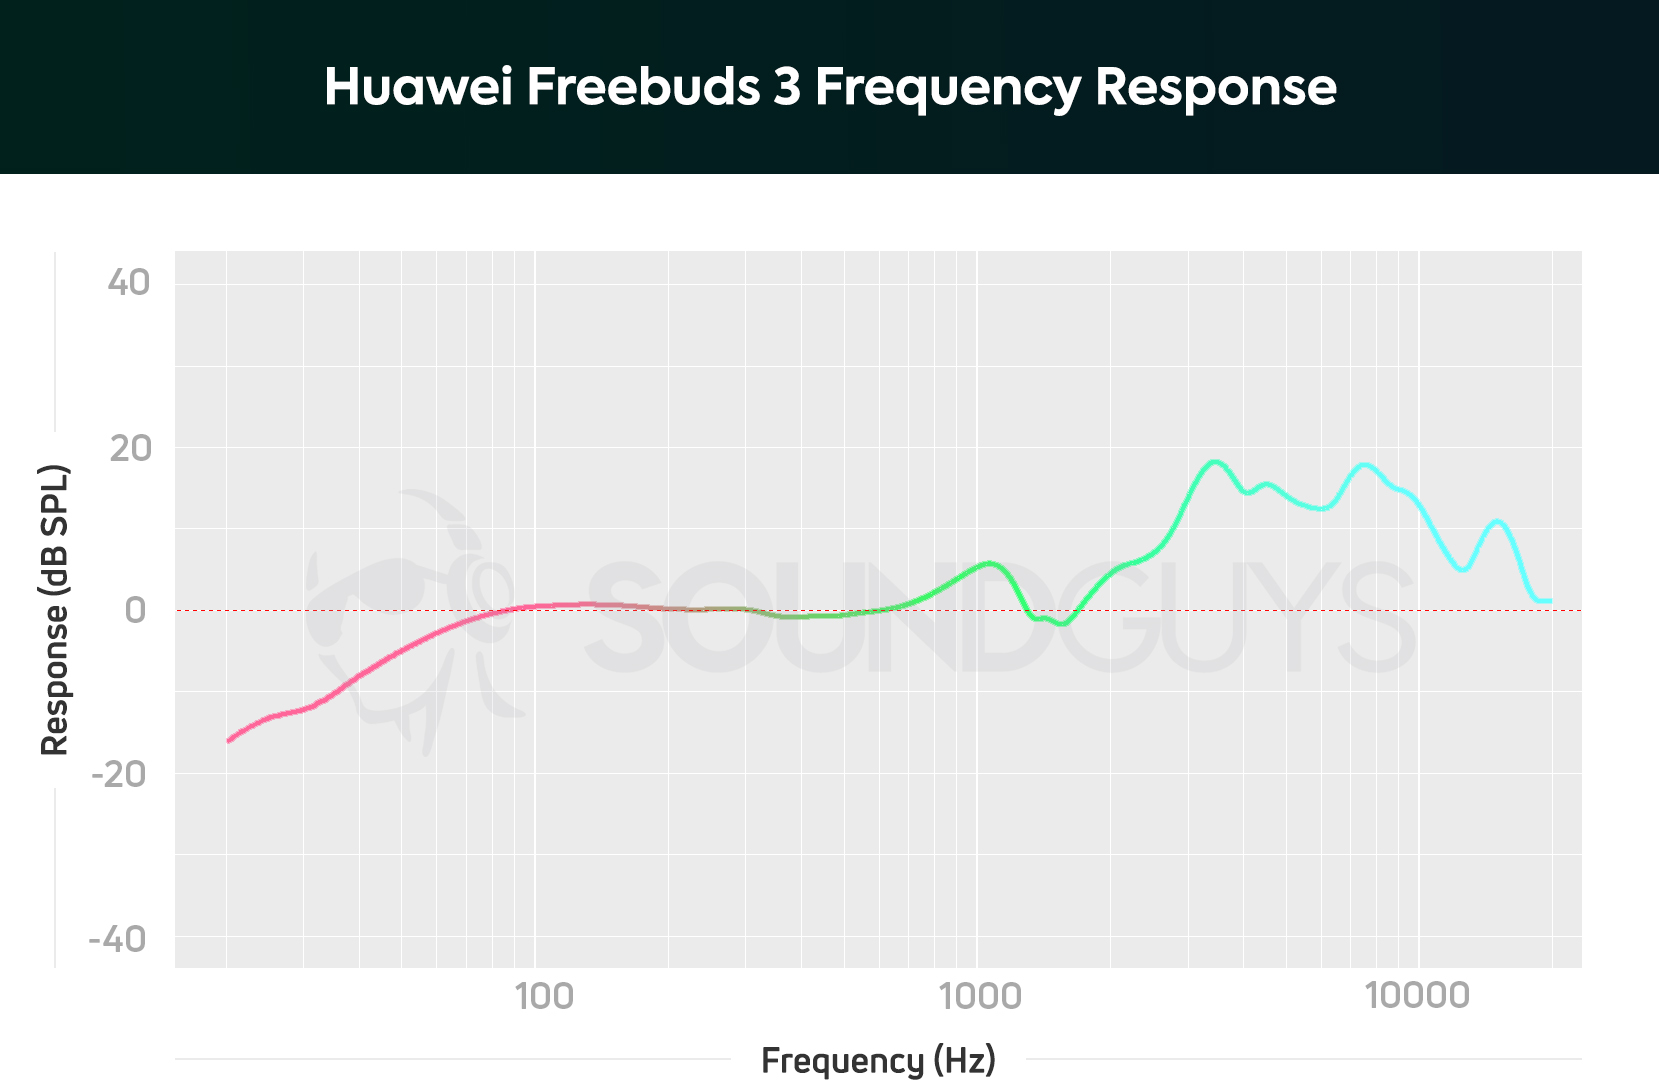 HUAWEI Freebuds 3 Frequency Response